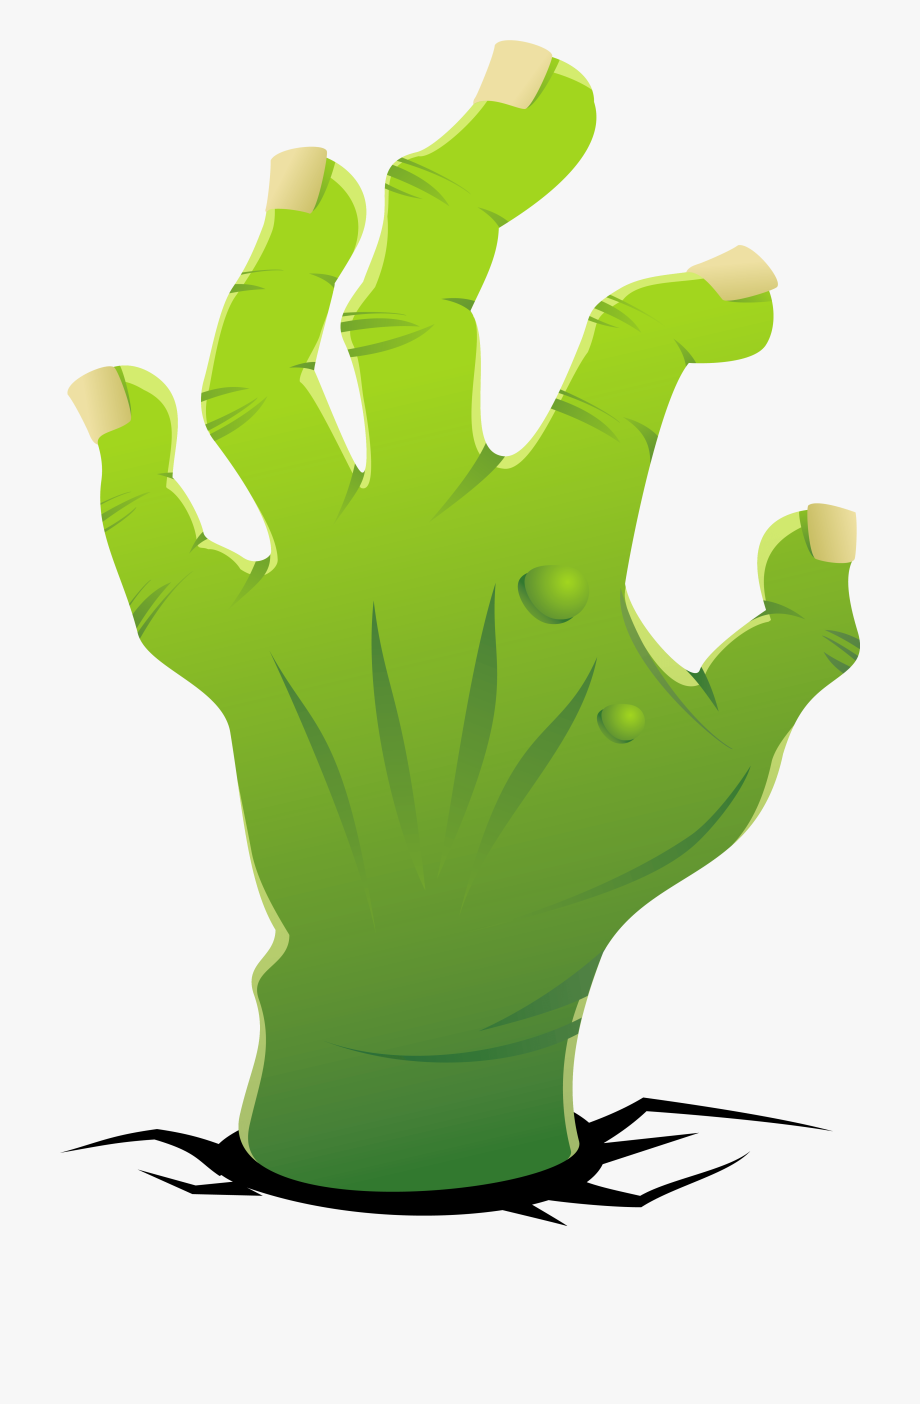 Zombie clipart hands. Hand png image transparent